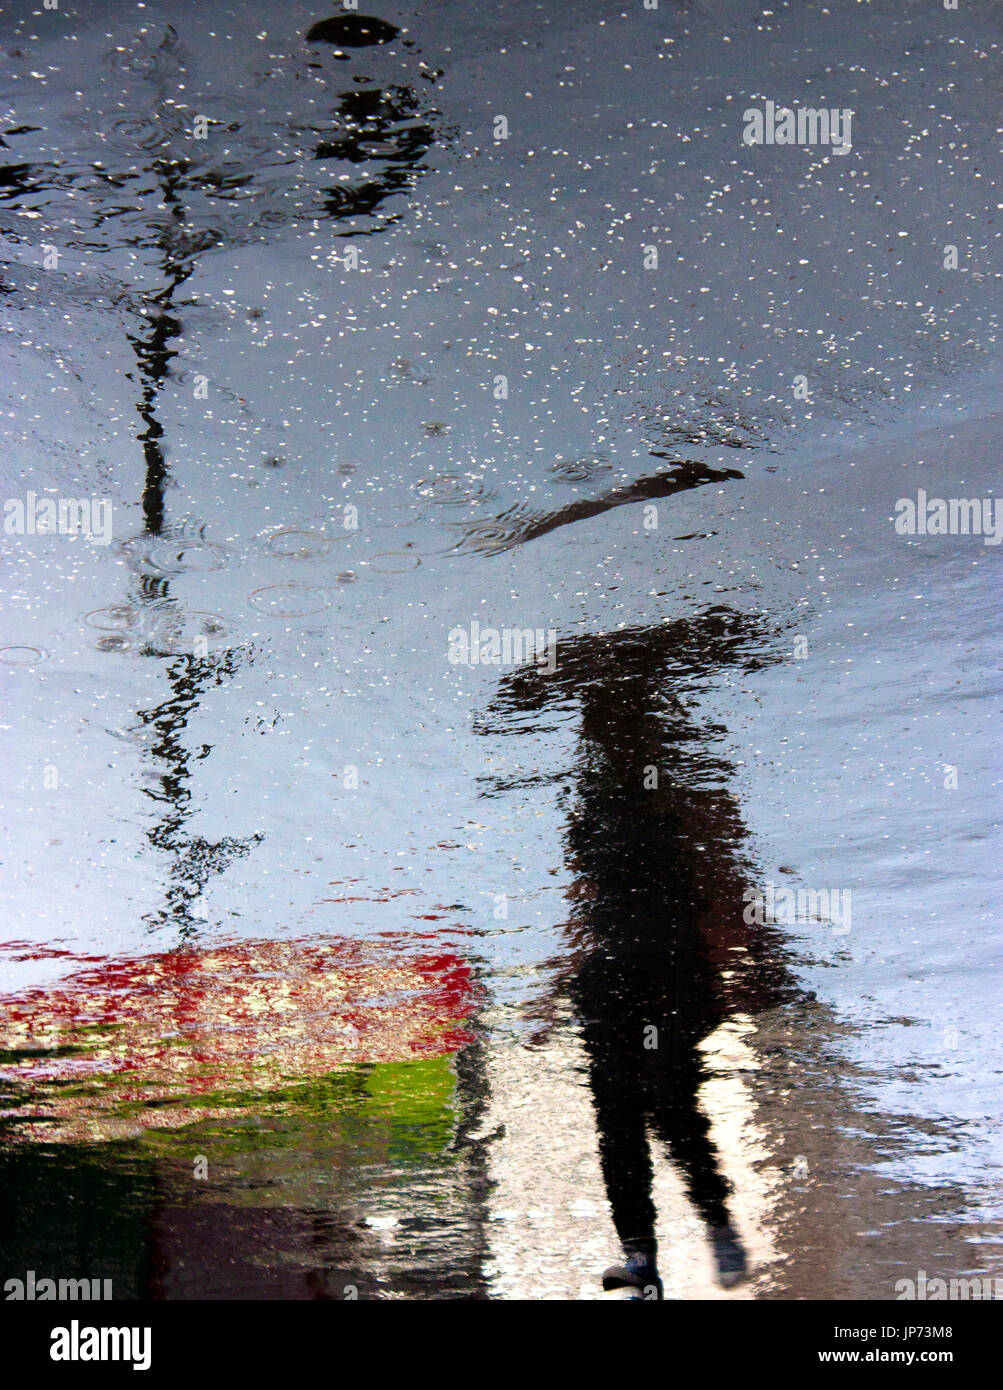 Blurry person under umbrella reflection shadow silhouette on rainy city street asphalt sidewalk Stock Photo